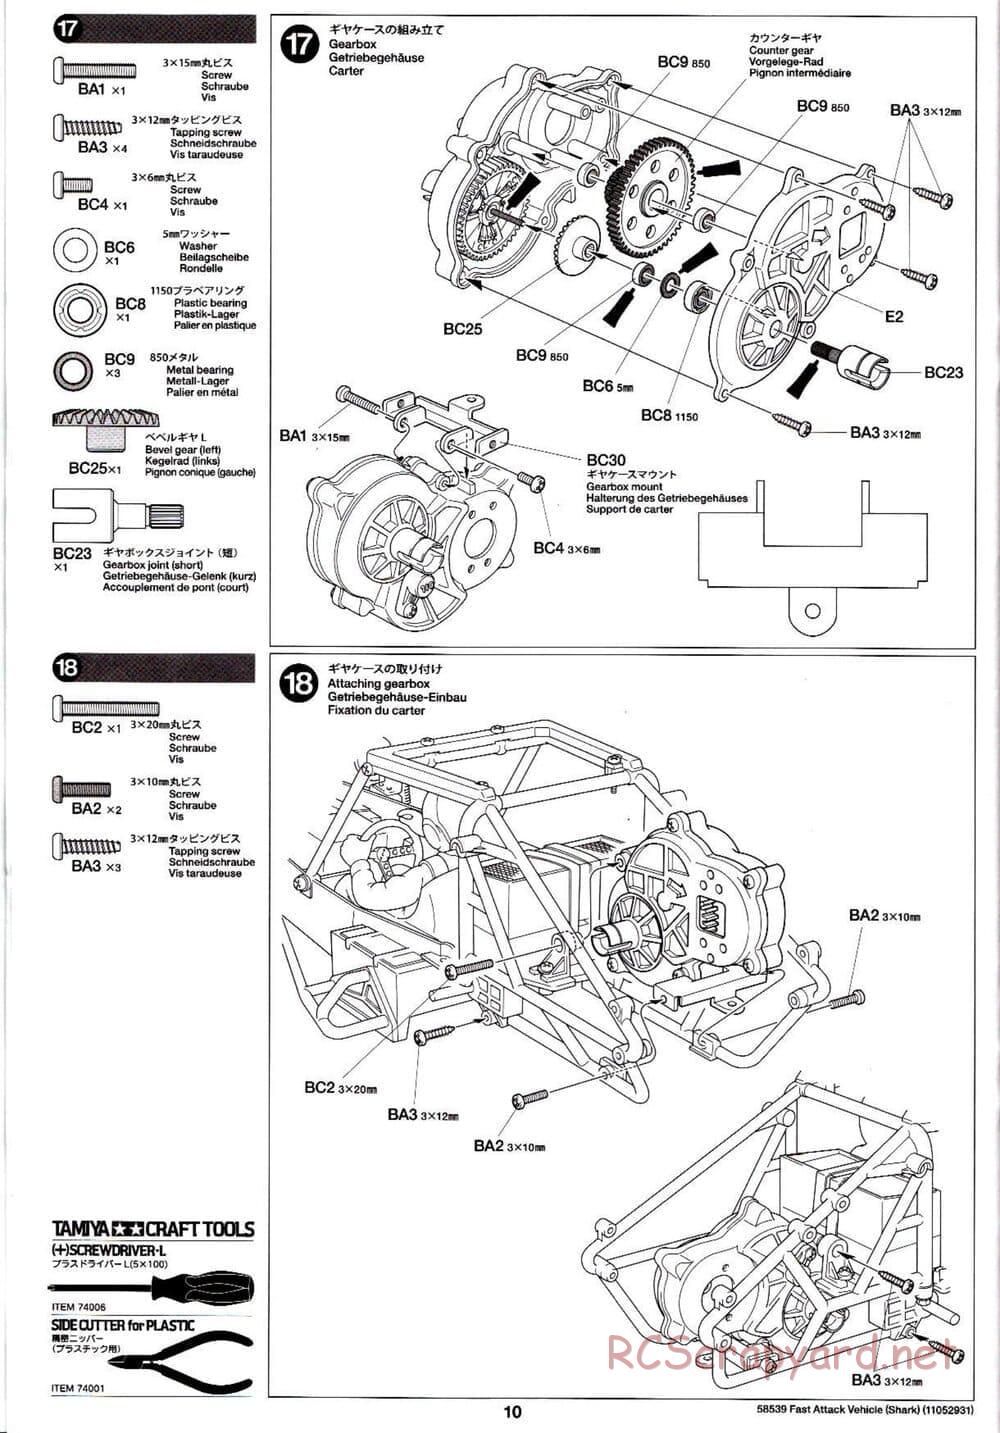 Tamiya - Fast Attack Vehicle w/ Shark Mouth - FAV Chassis - Manual - Page 10